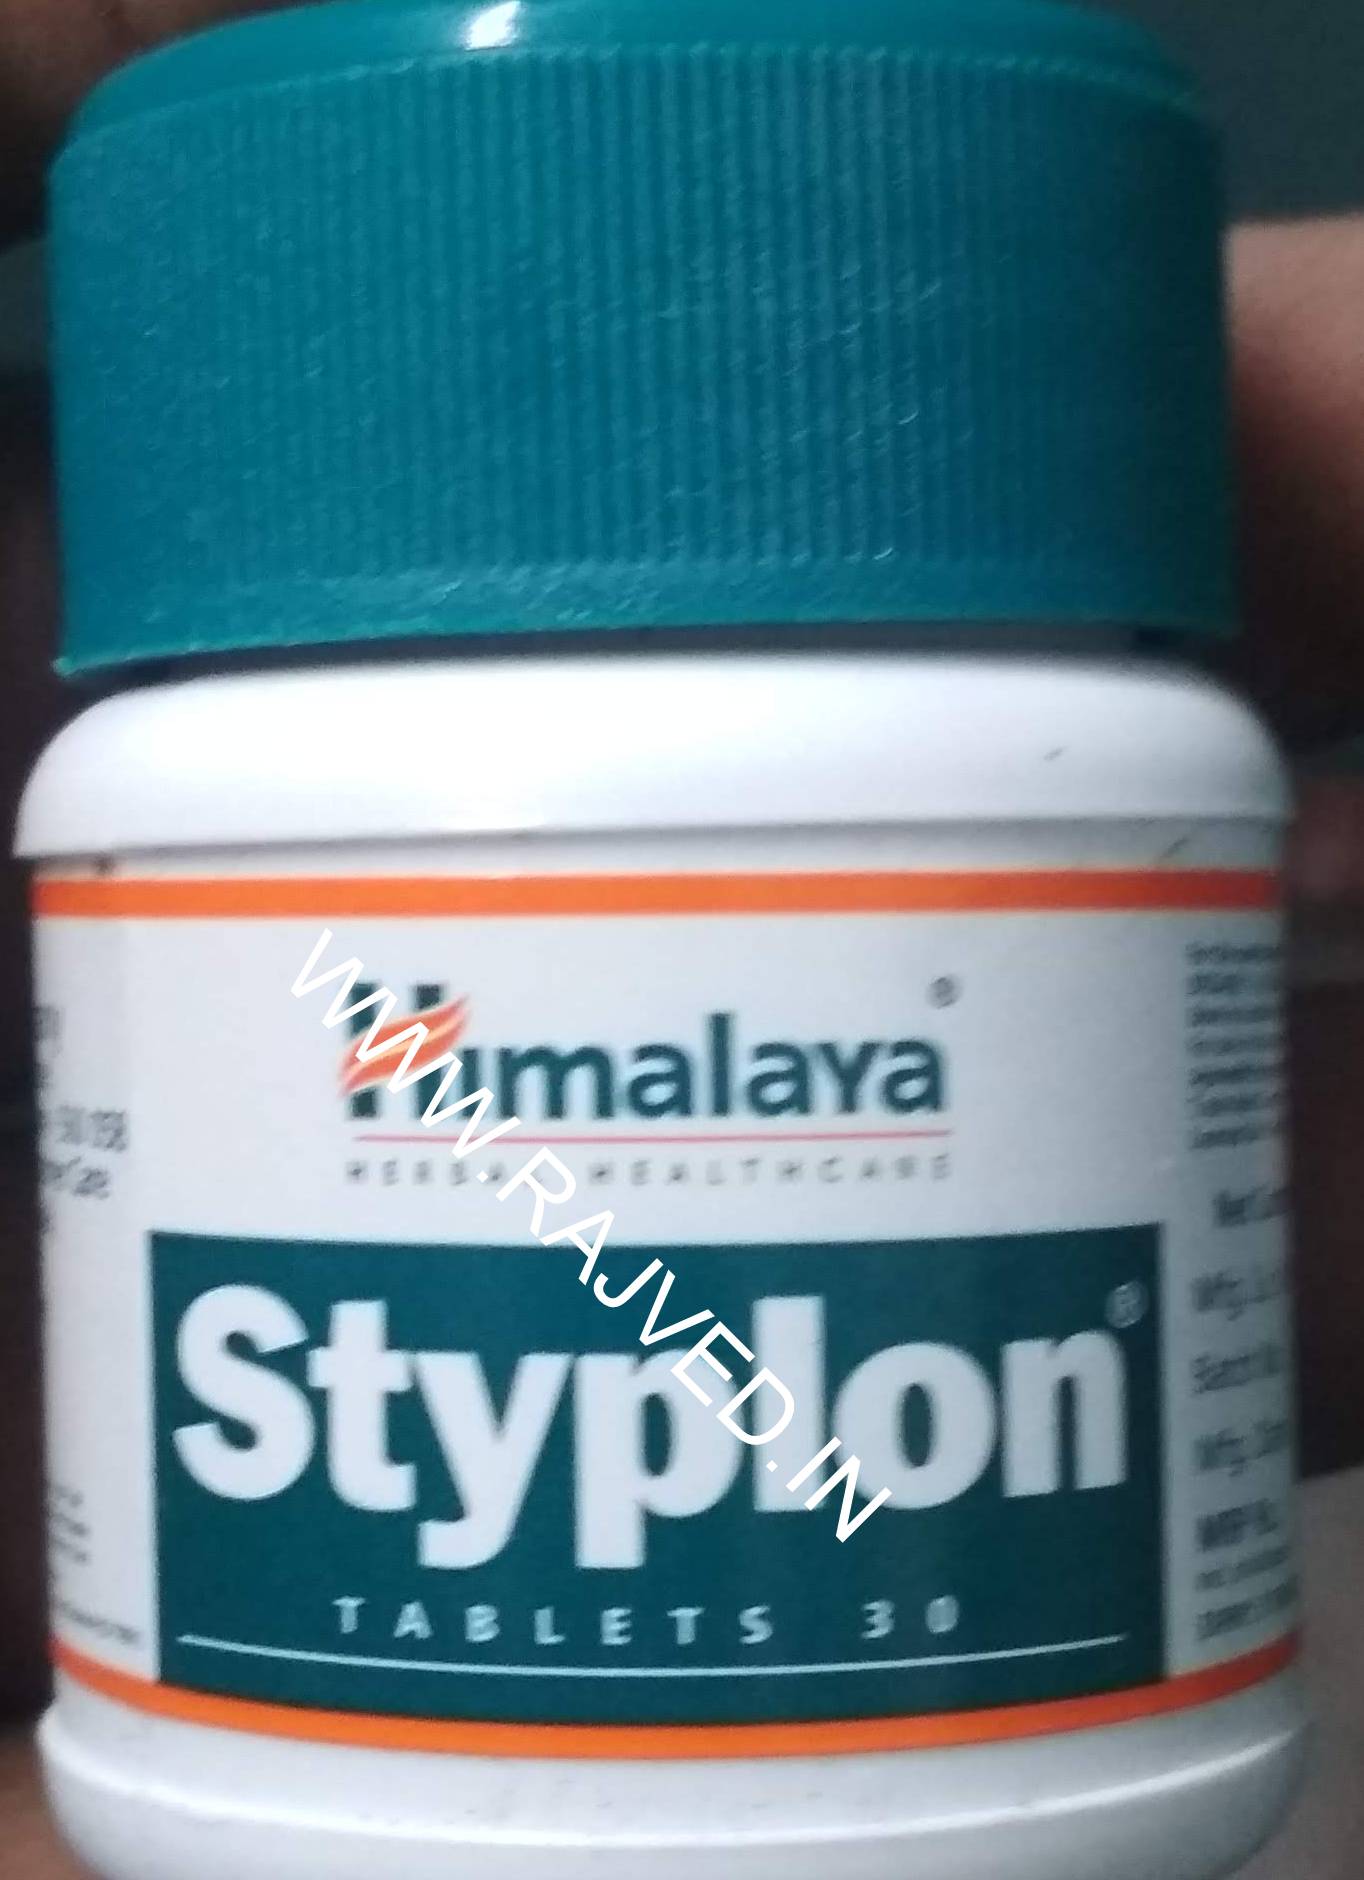 styplon tablets 30 tabs the himalaya drug company